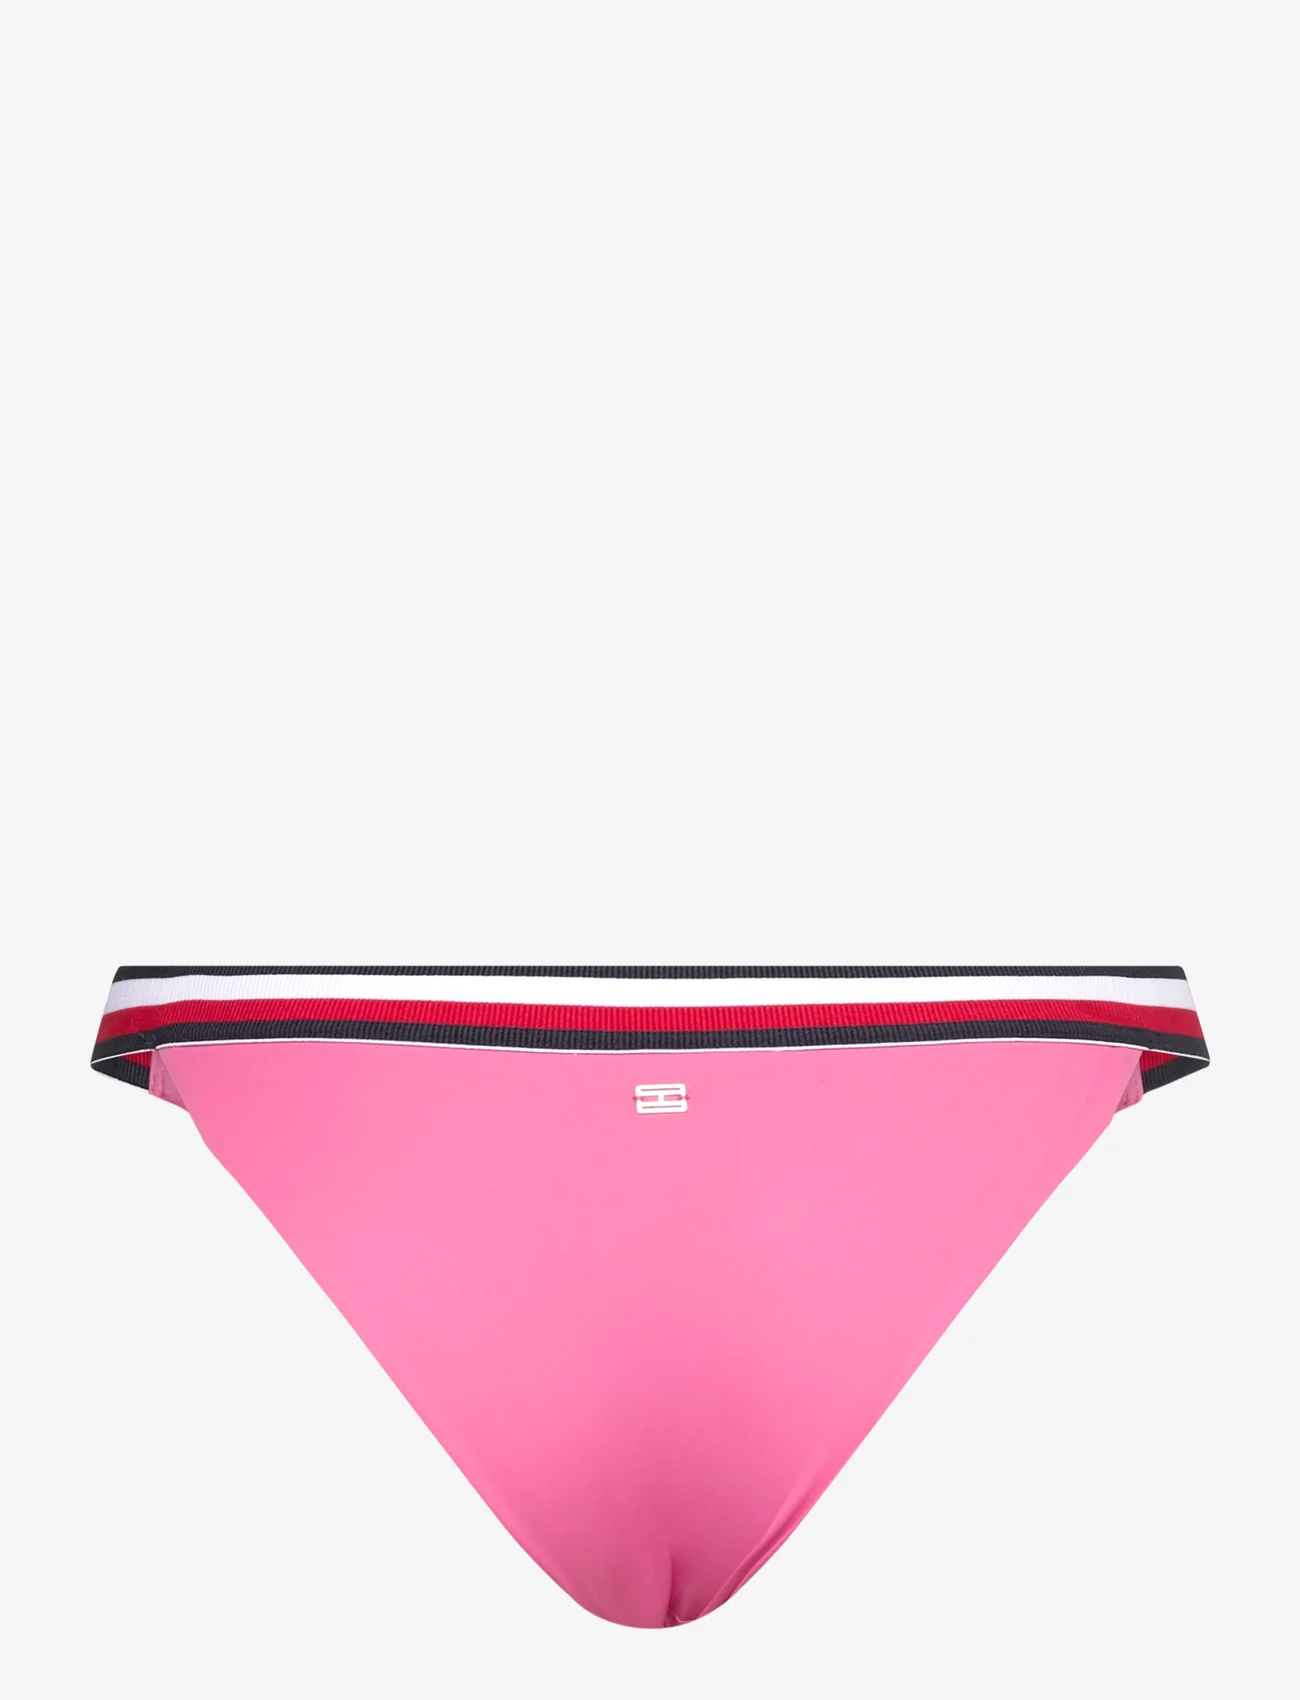 Tommy Hilfiger - CHEEKY BIKINI - bikinibriefs - radiant pink - 1